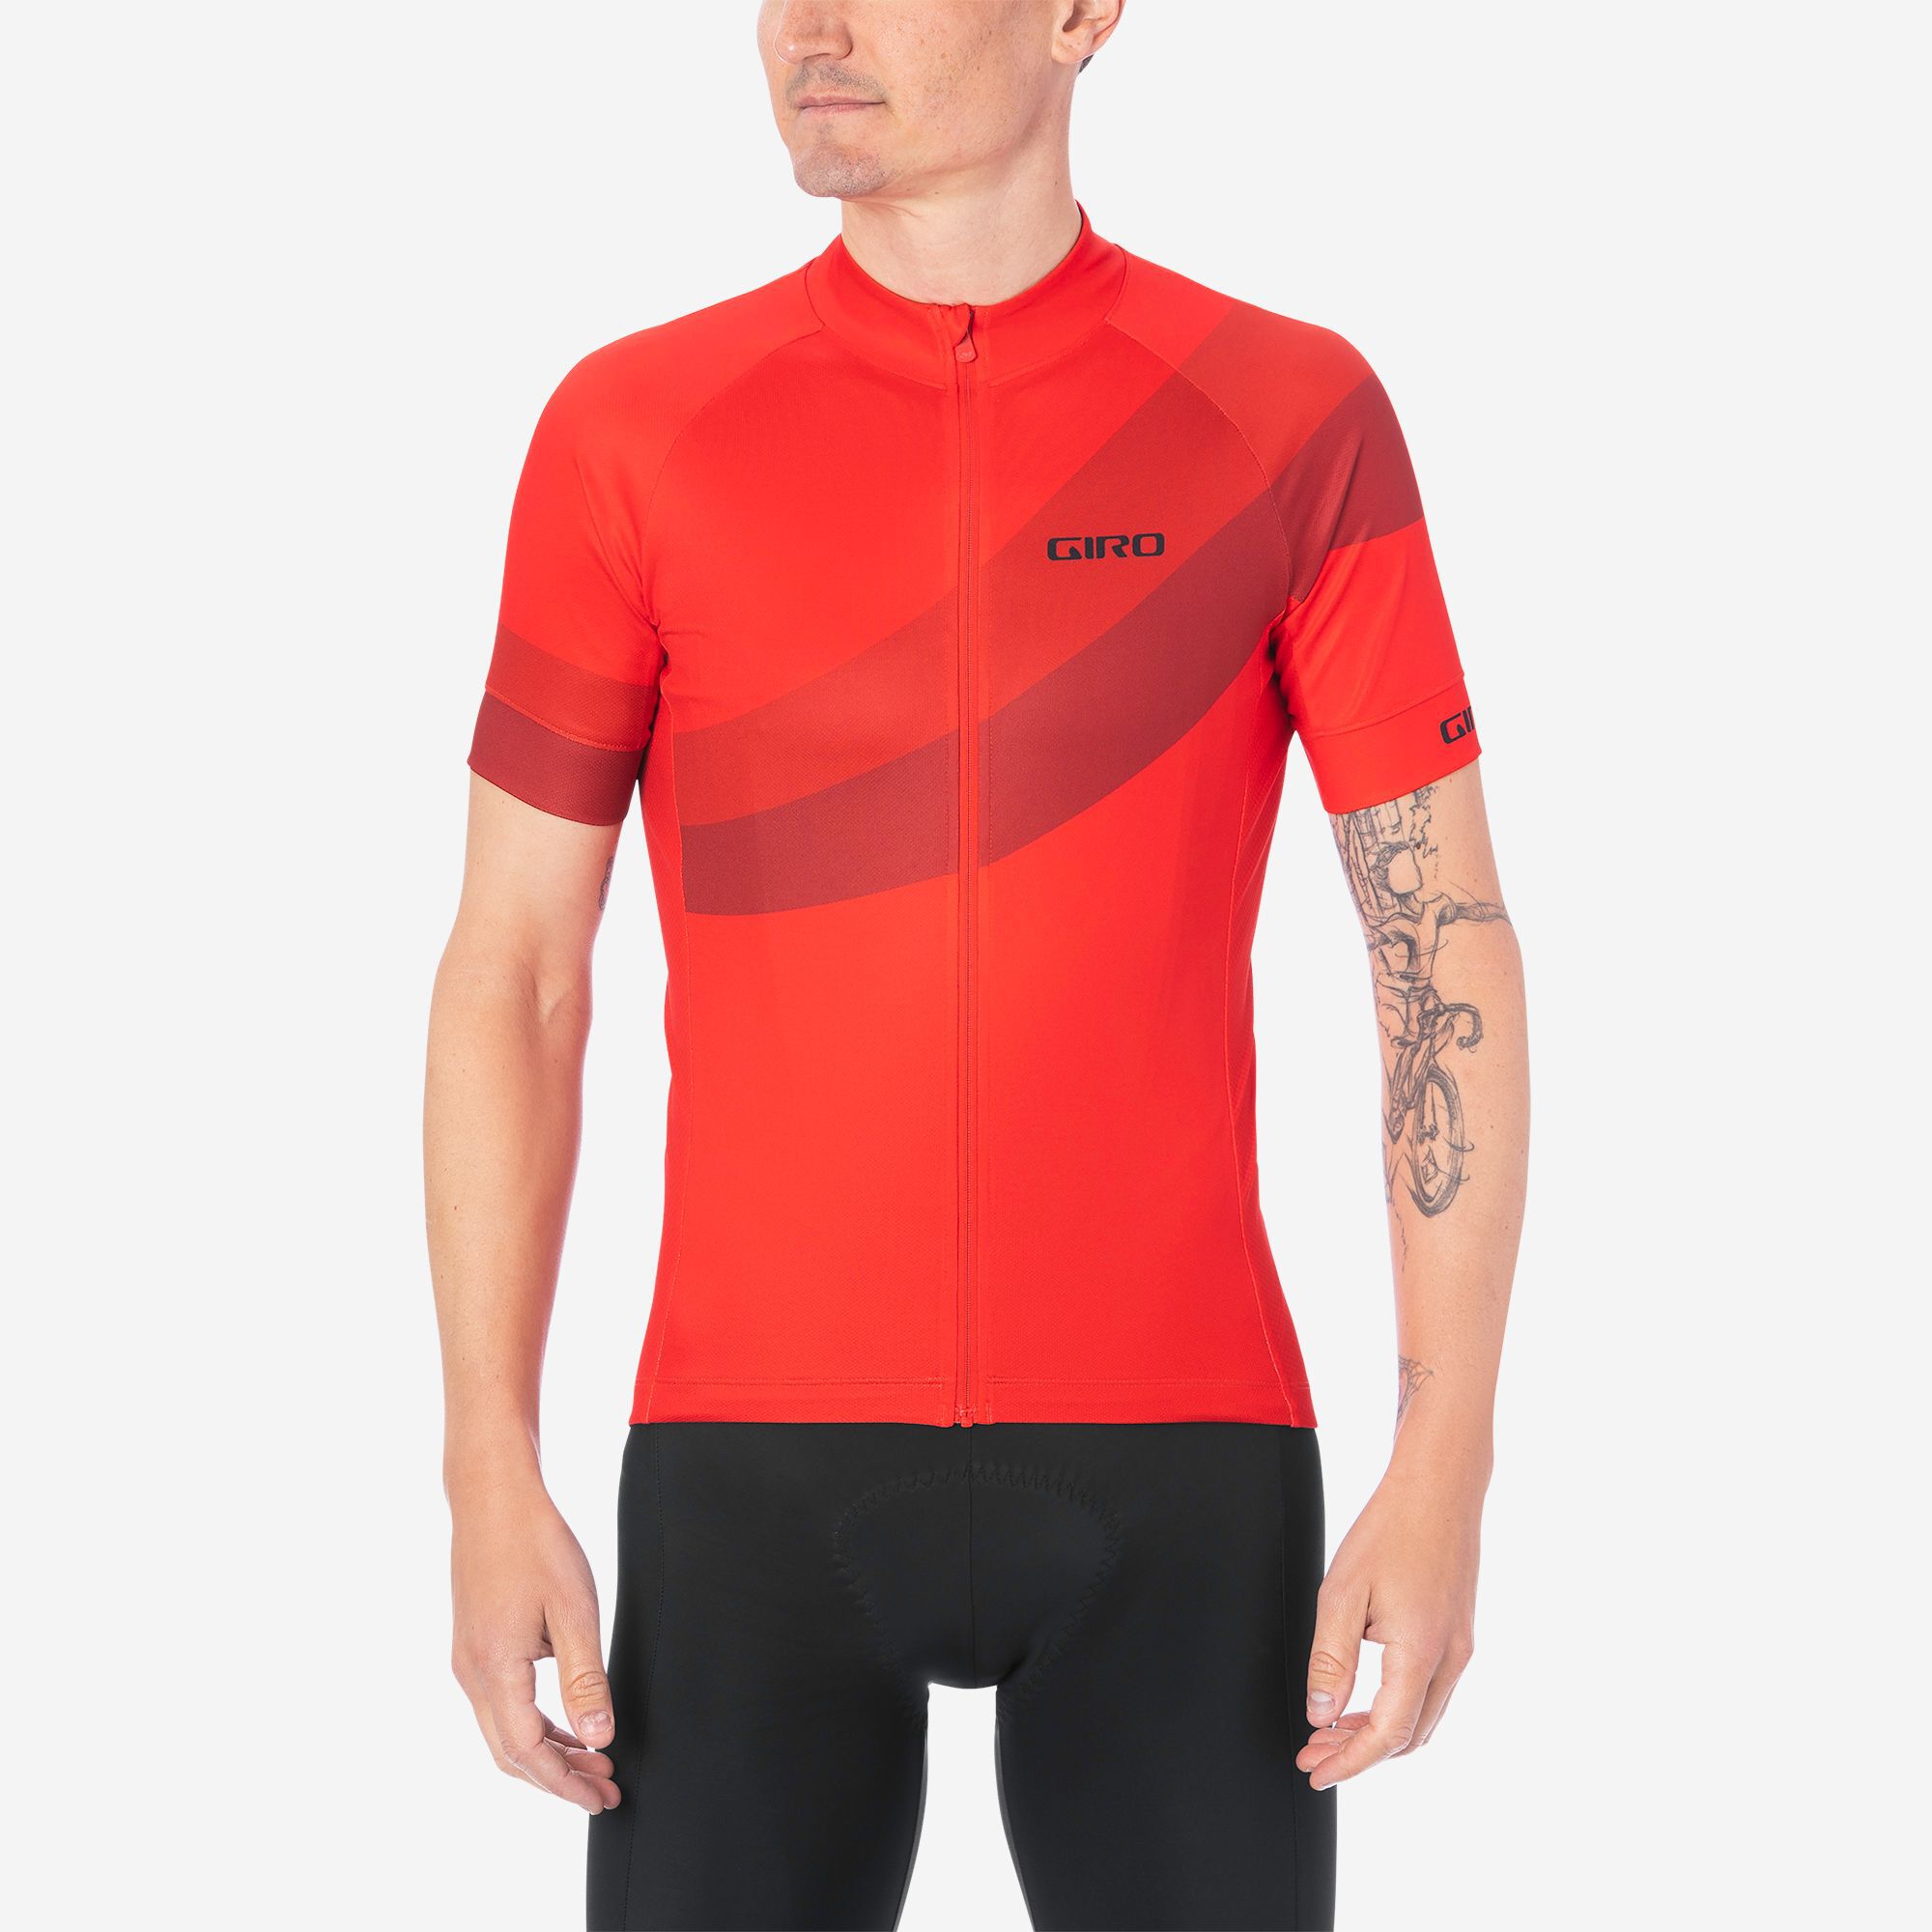 men's cycling apparel